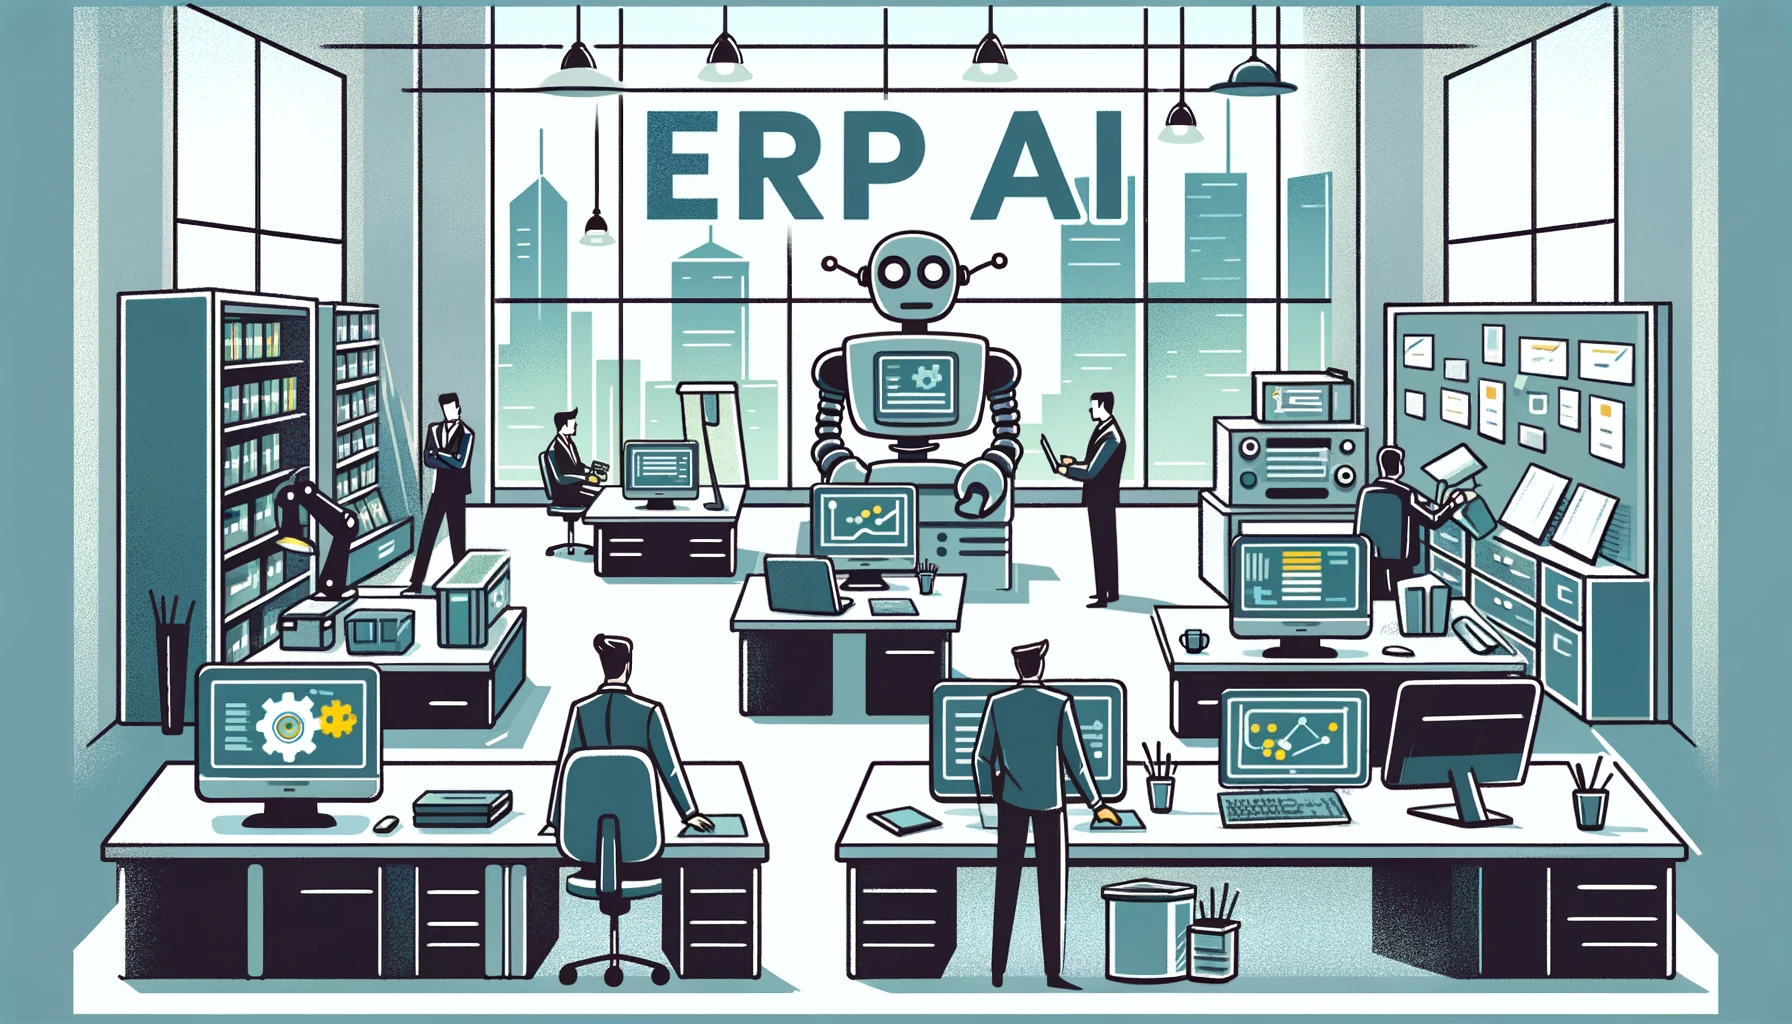 ERP AI Automation